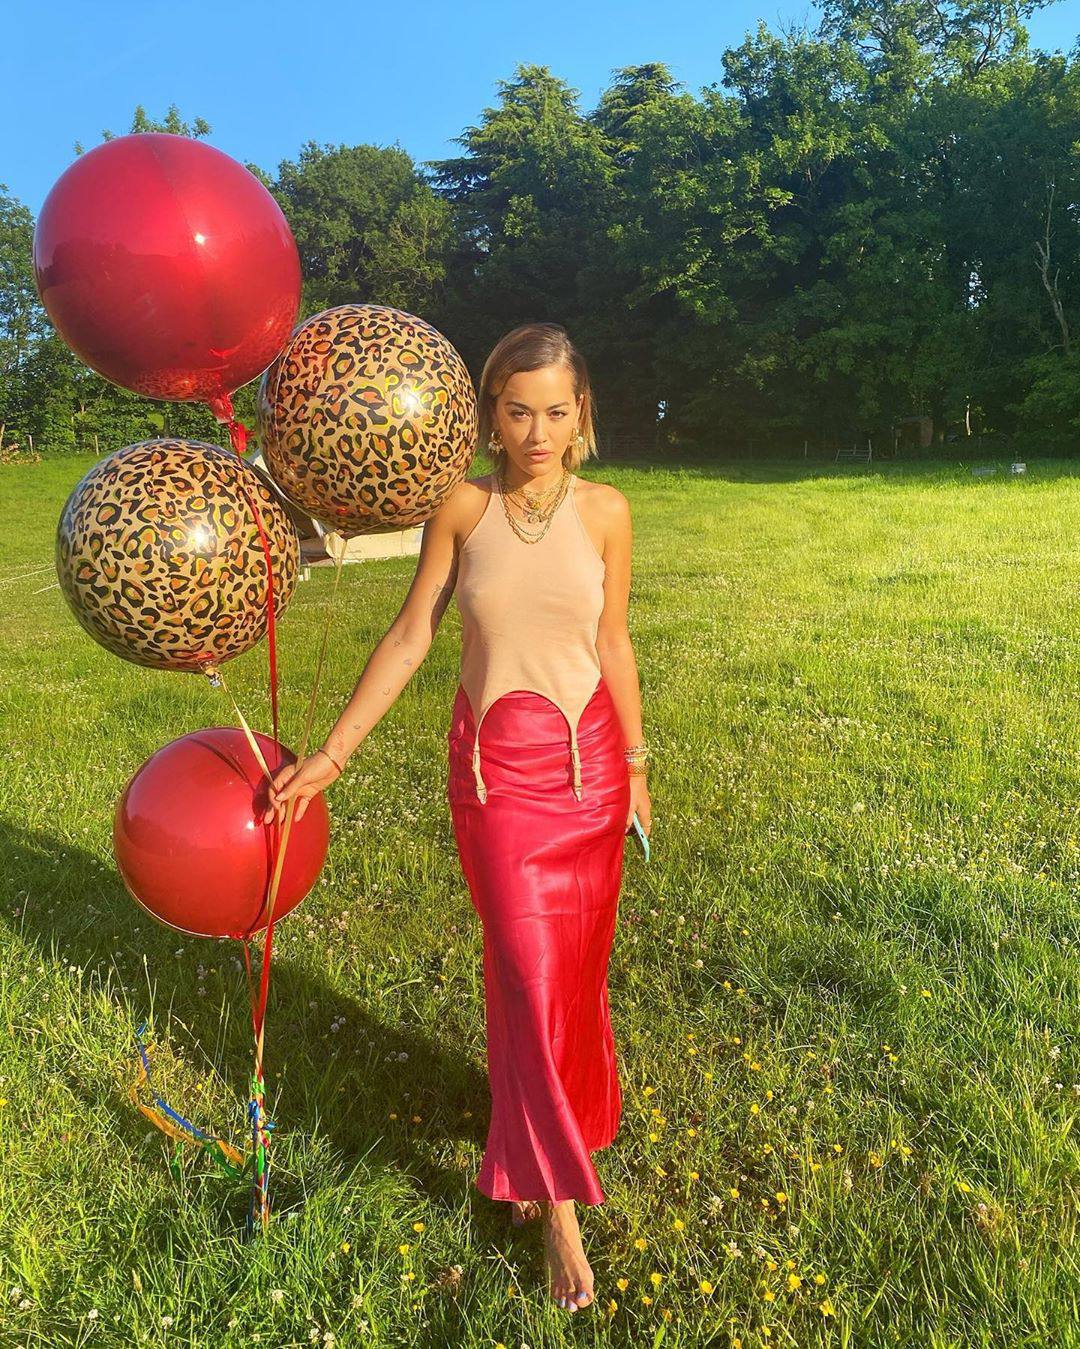 Rita Ora – Sexy Boobs In Braless Photoshoot At Balloon Party 0002